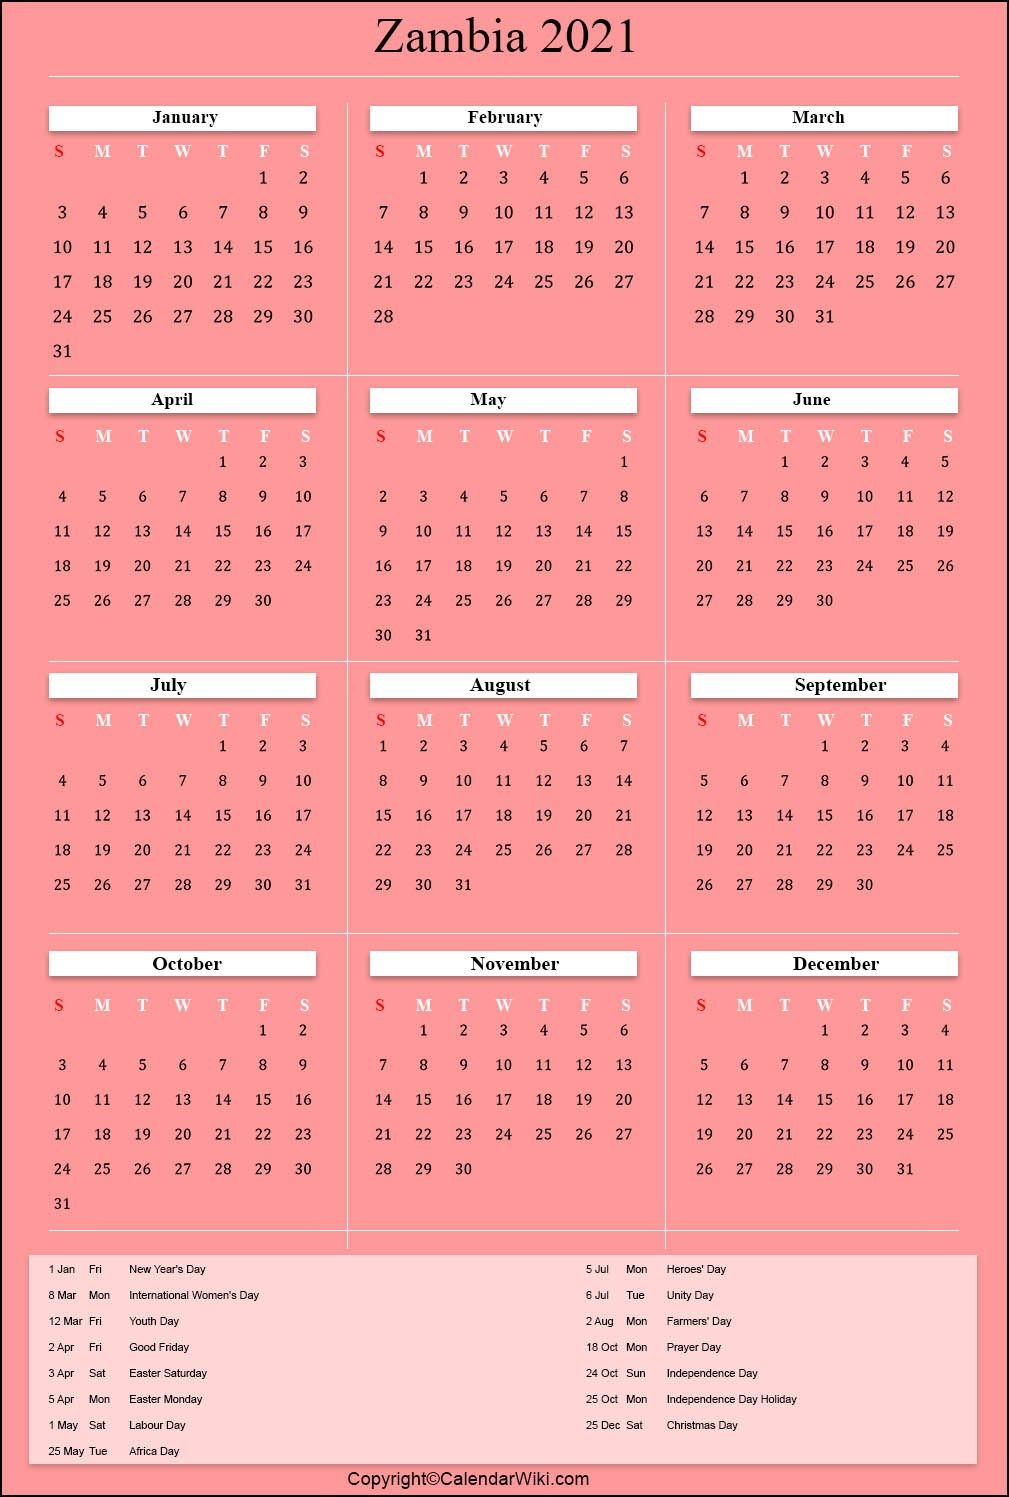 printable zambia calendar 2021 with holidays [public holidays]